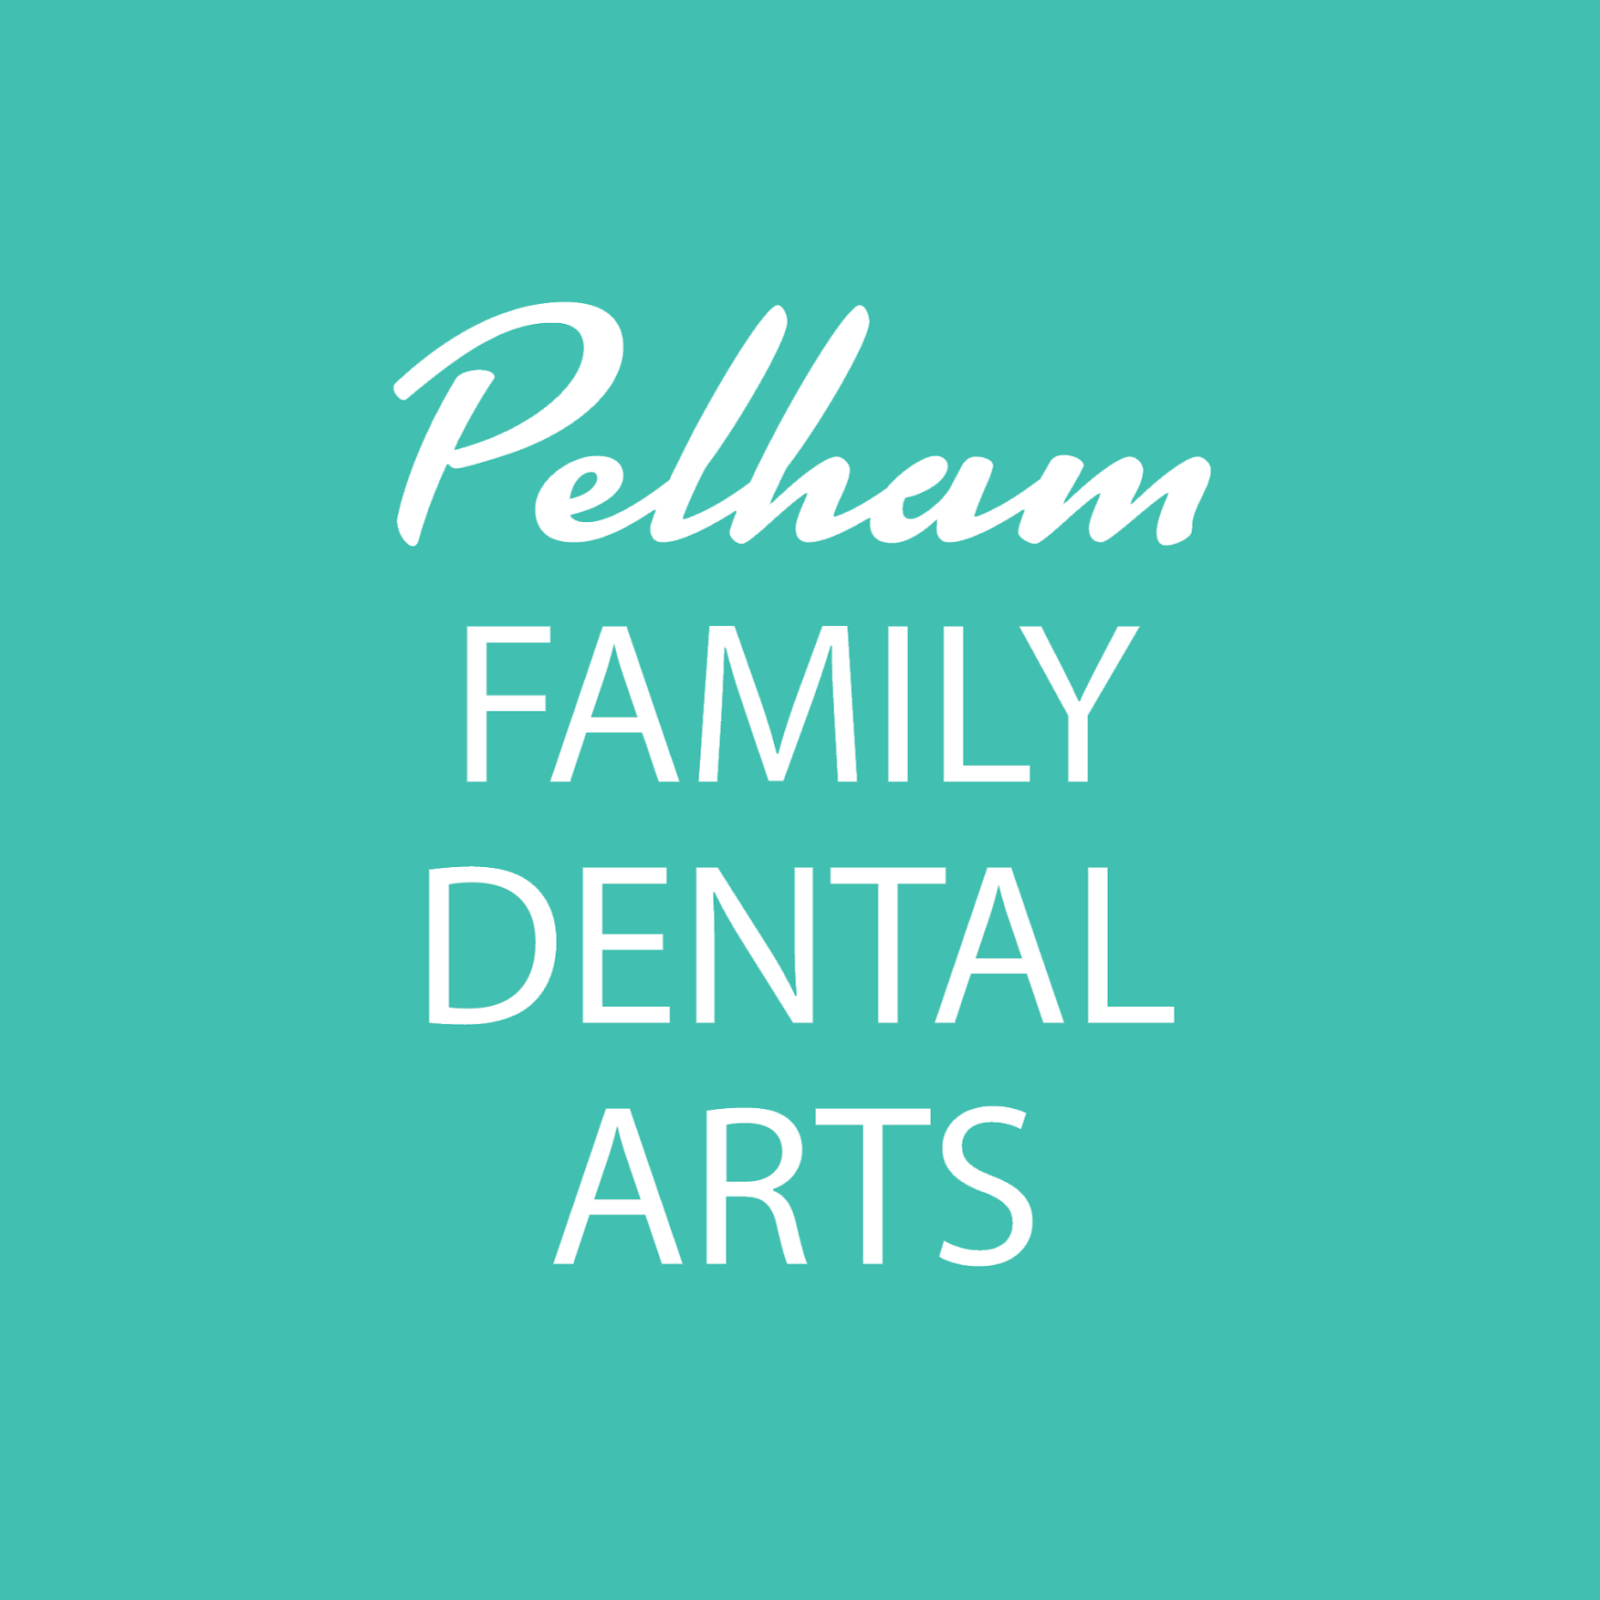 Photo of Pelham Family Dental Arts in Pelham City, New York, United States - 2 Picture of Point of interest, Establishment, Health, Doctor, Dentist